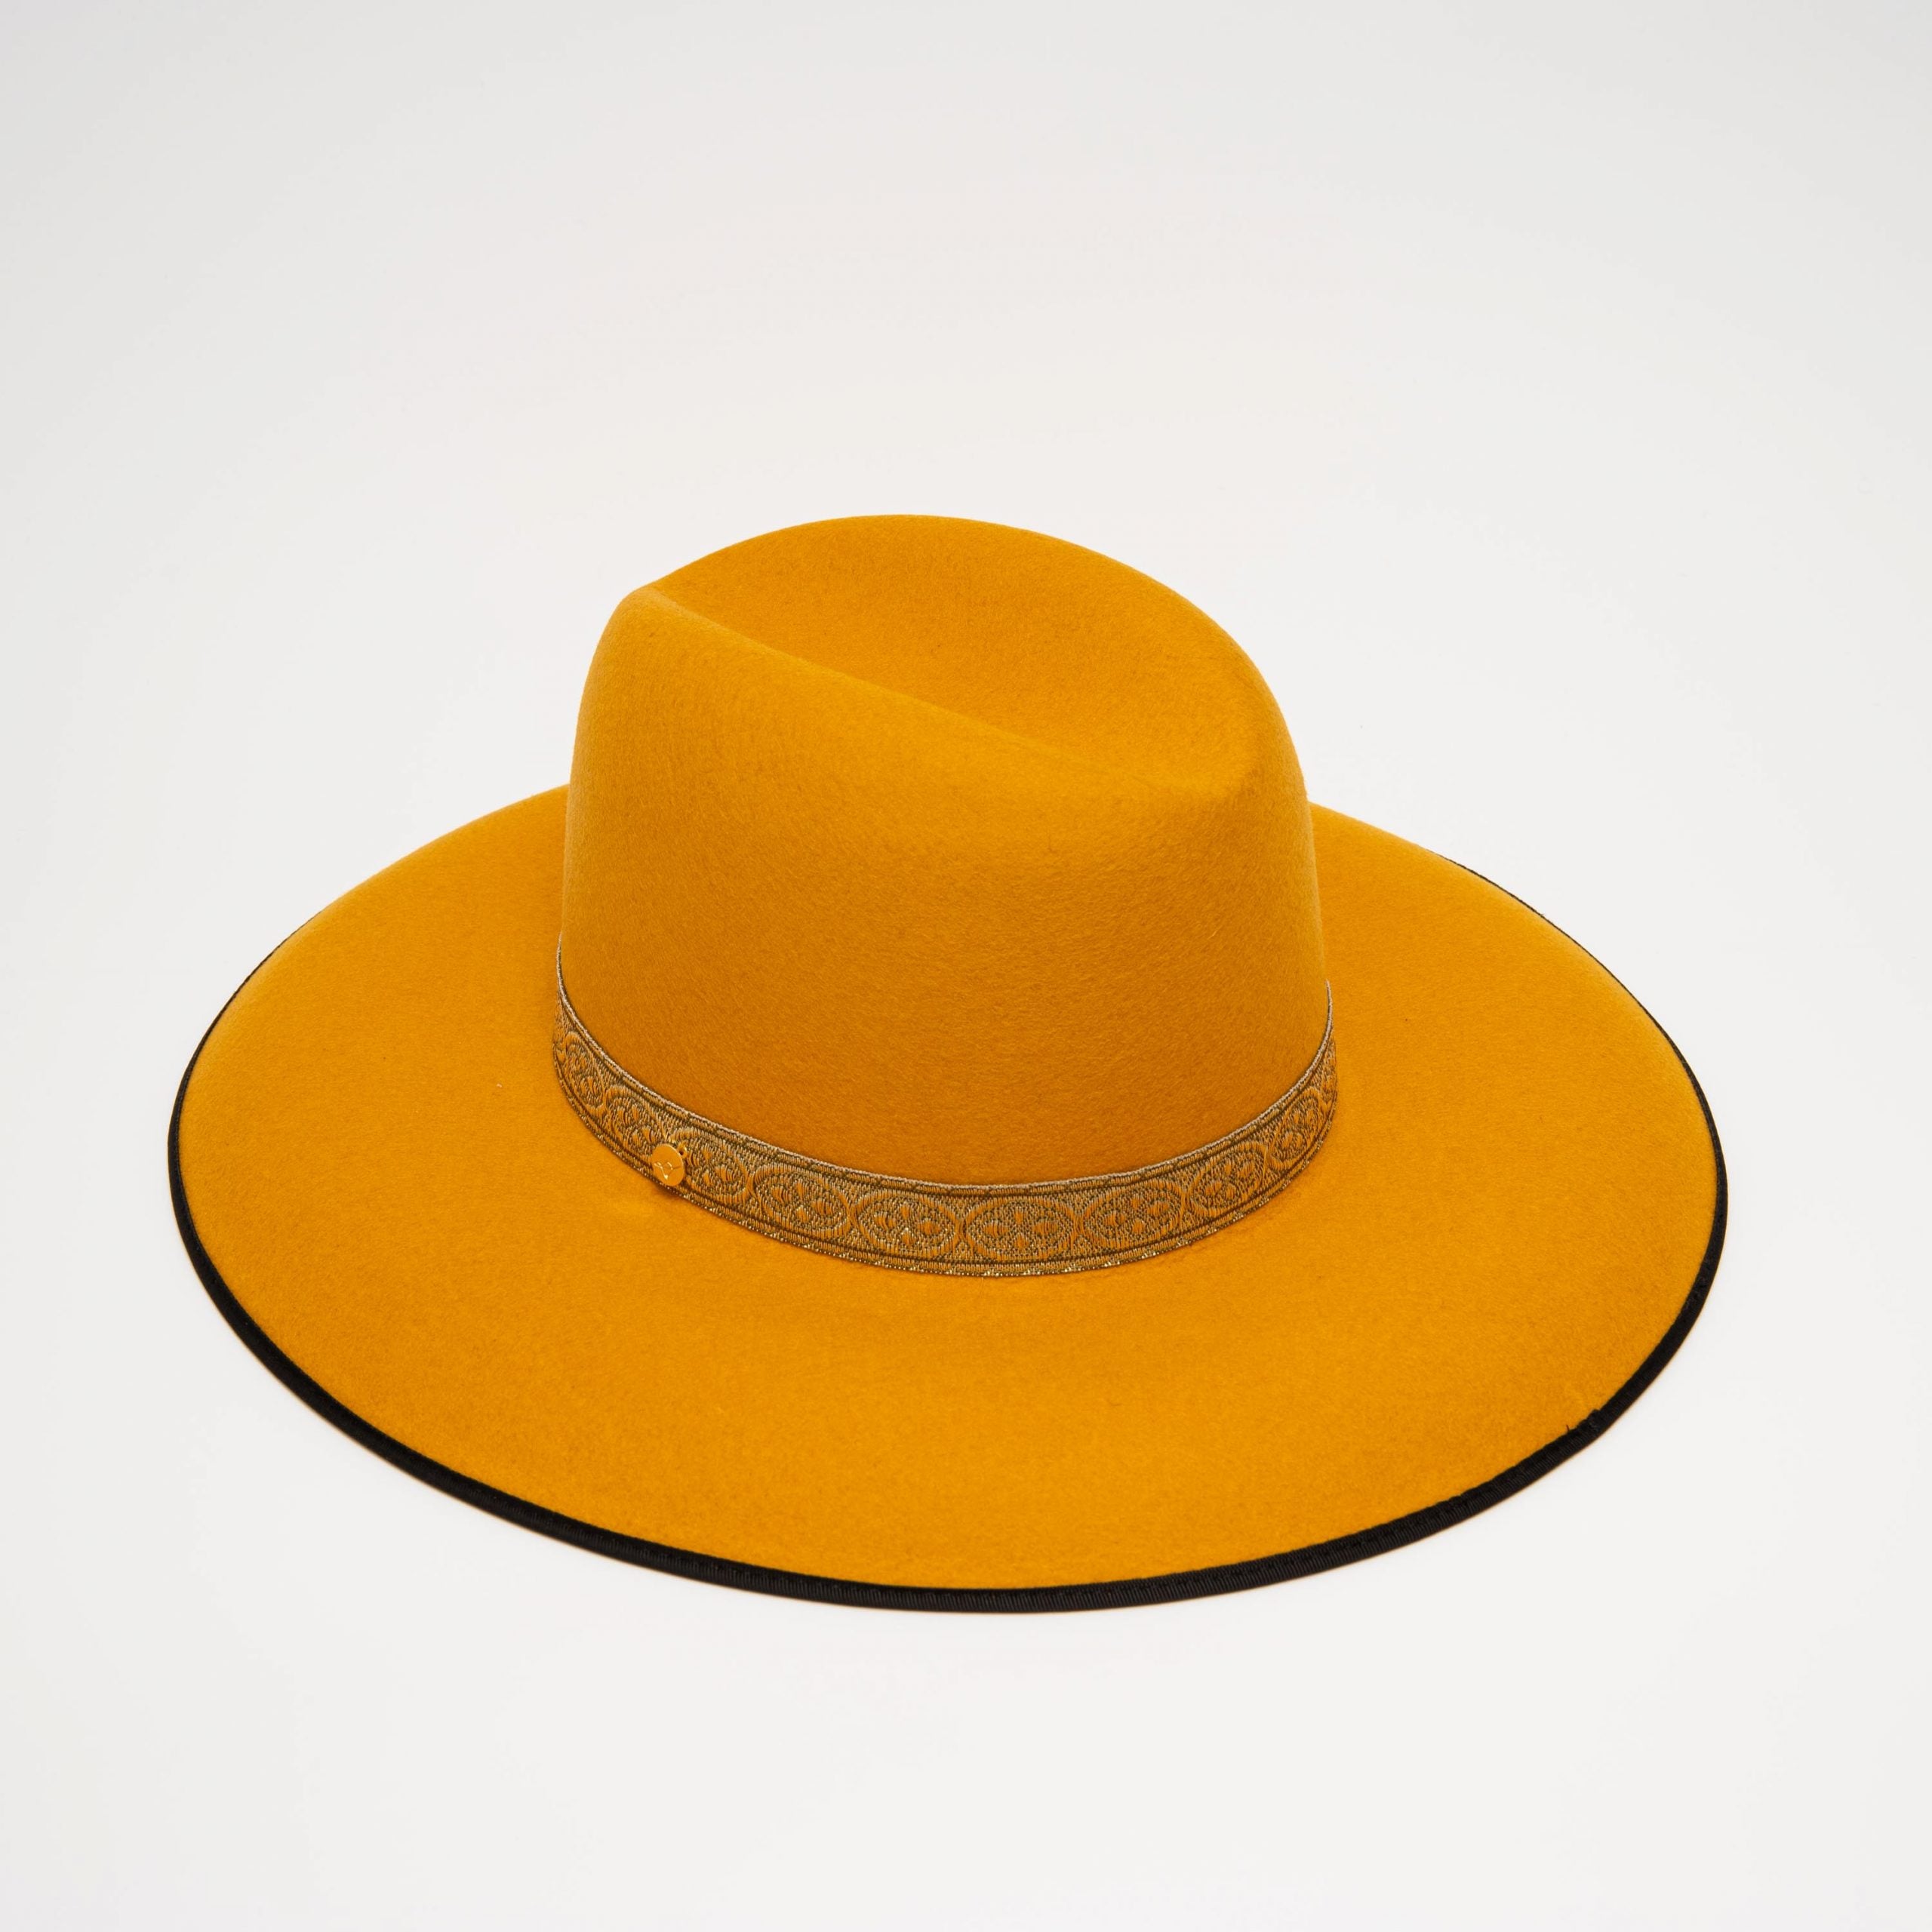 Chapeau Firenze moutard avec ruban interchangeable doré